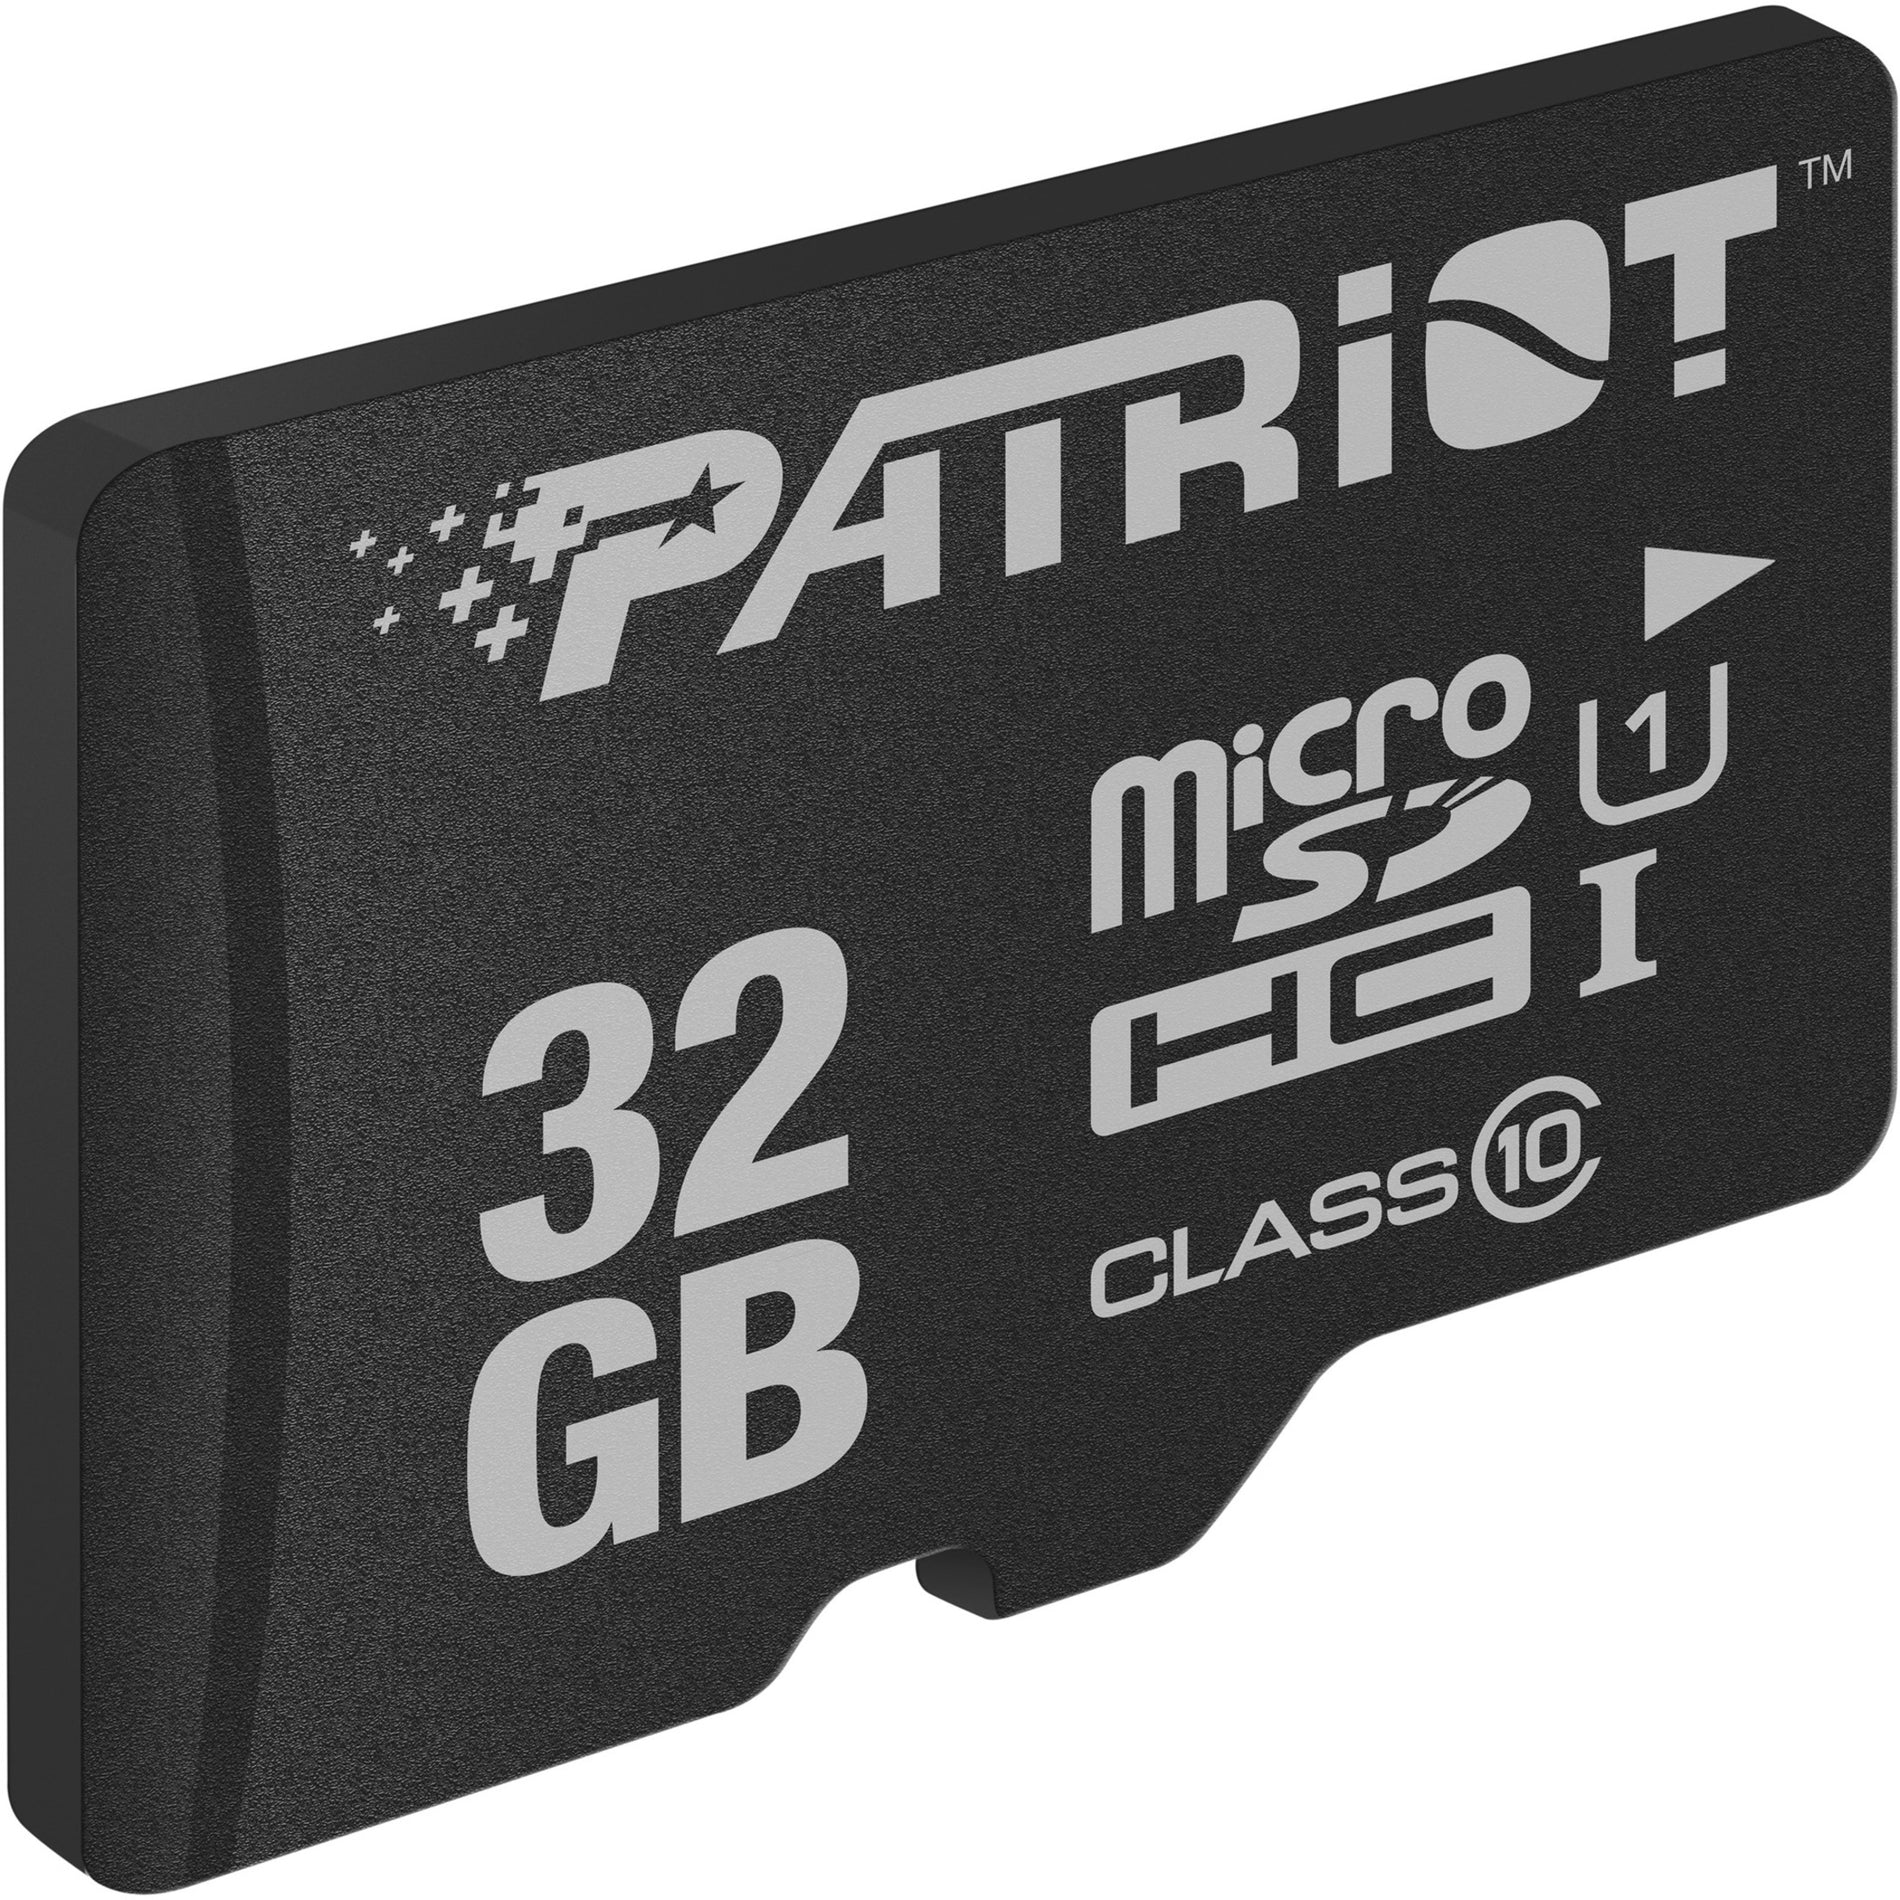 Patriot Memory PSF32GMDC10 LX 32GB microSDHC Card, 2 Year Limited Warranty, Class 10/UHS-I (U1), 80 MB/s Maximum Read Speed